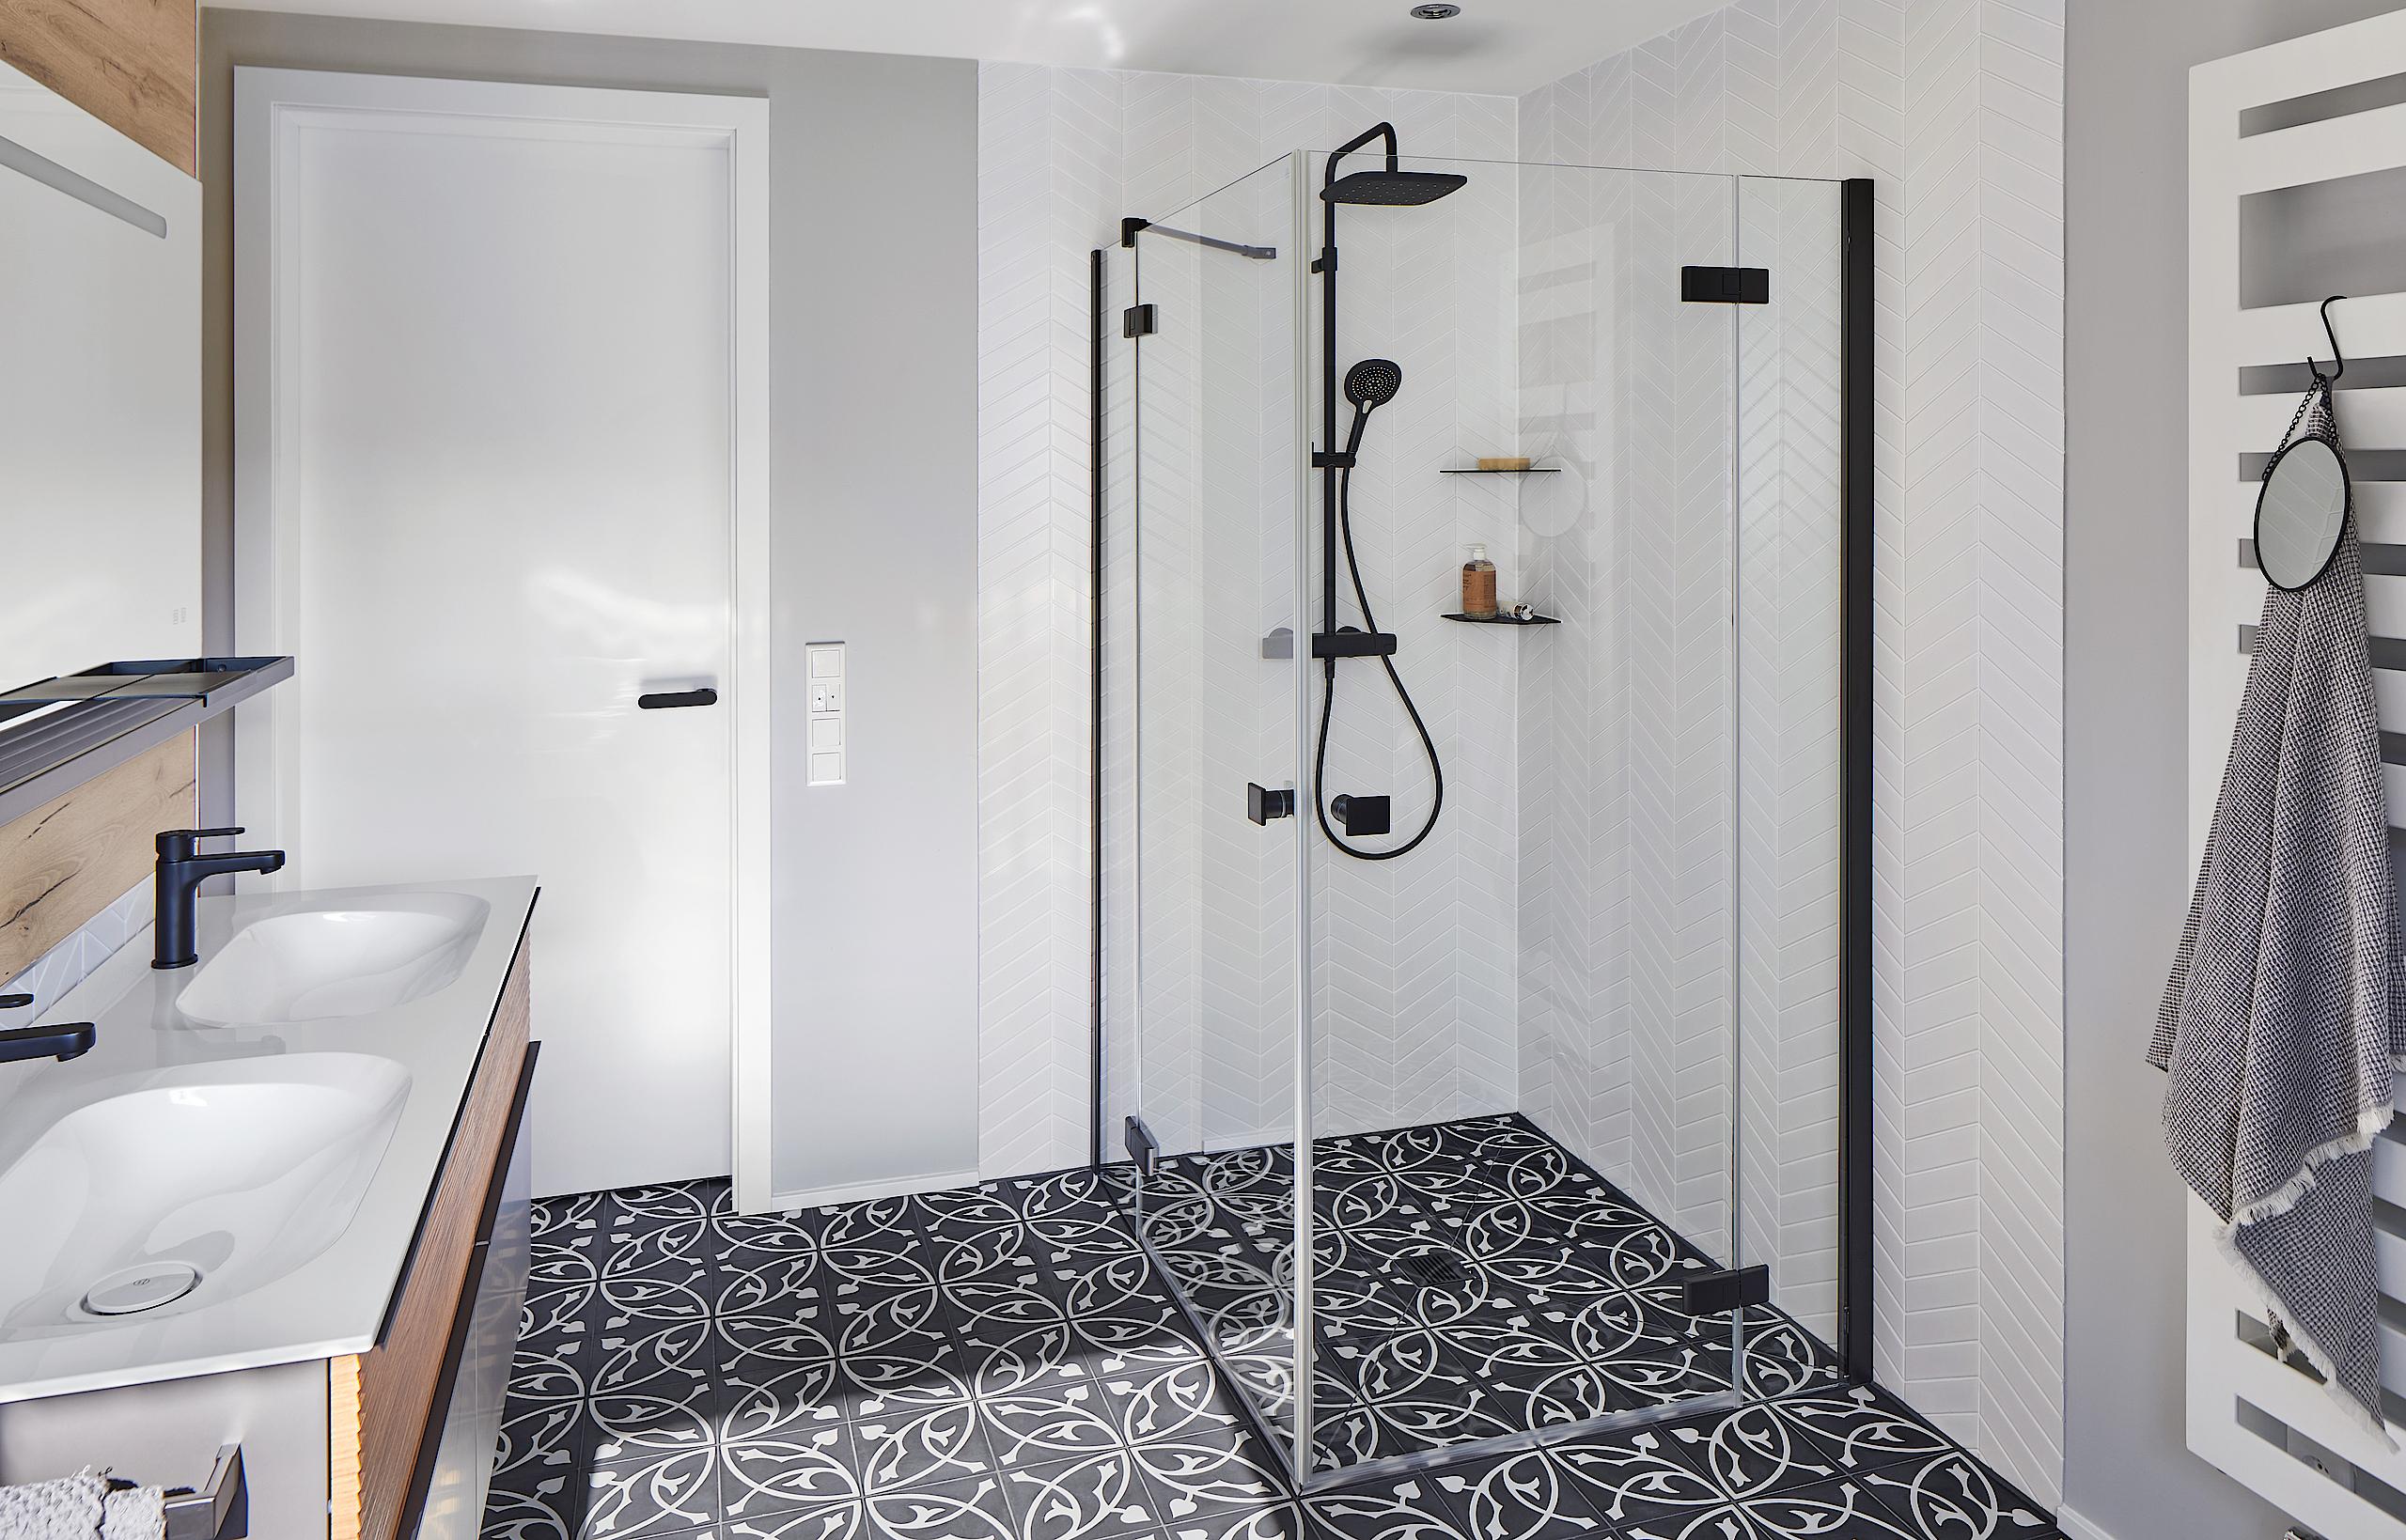 Kermi shower enclosure MENA in timeless Black & White